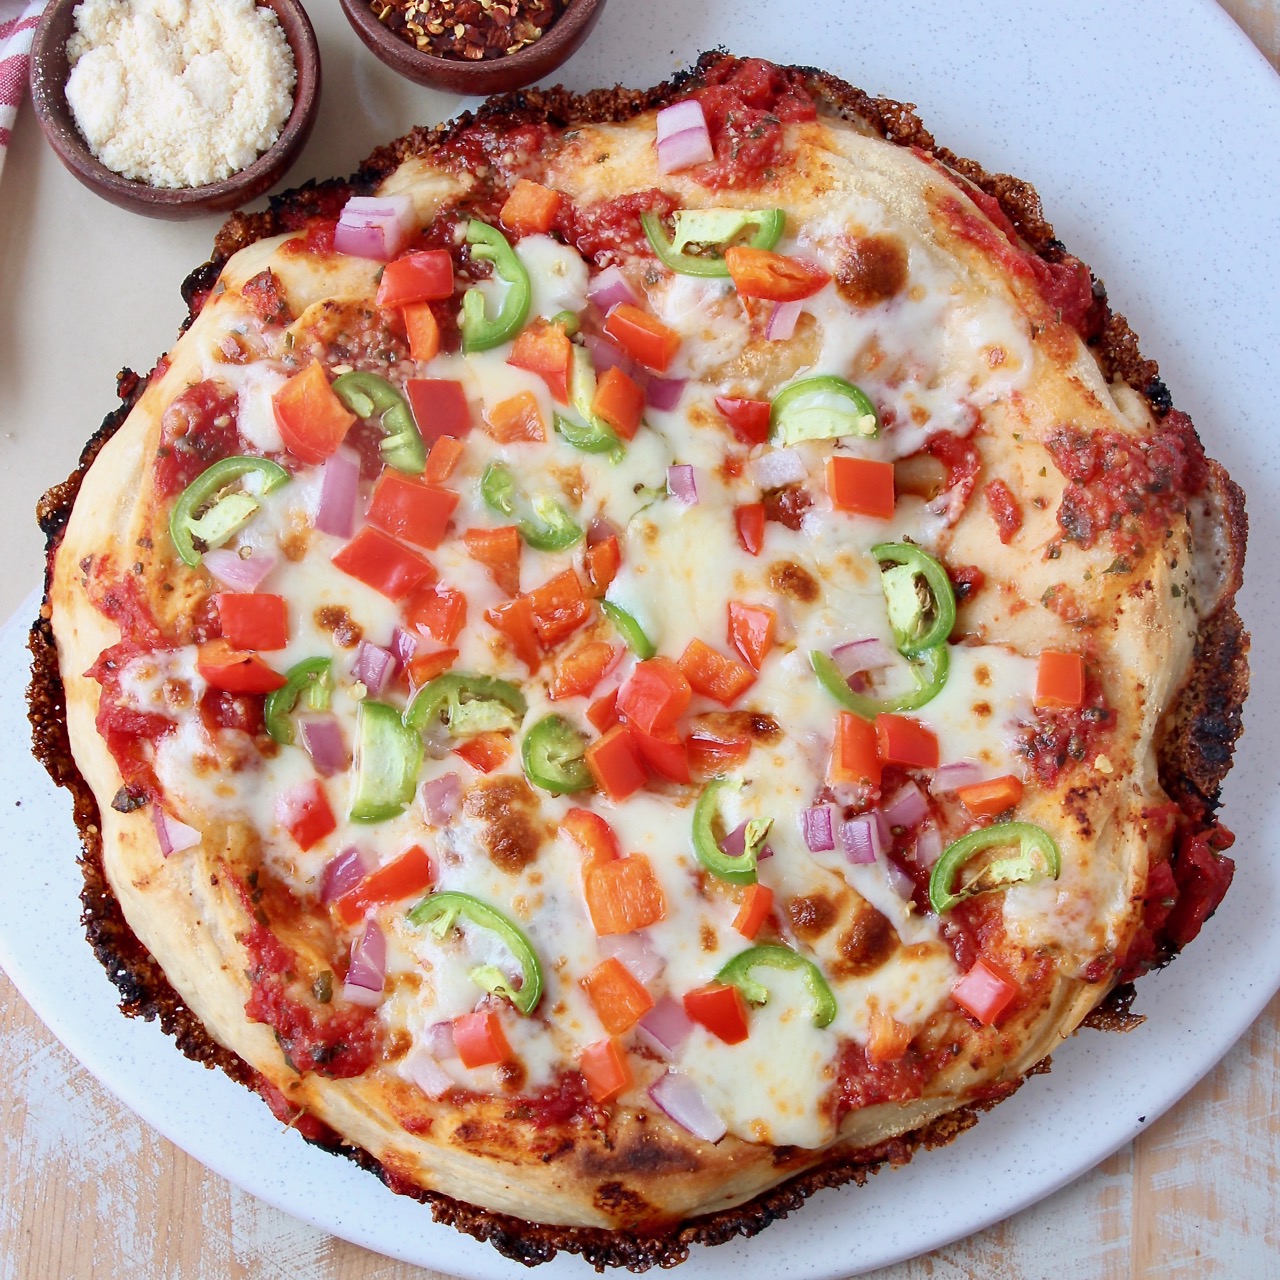 The BEST Pan Pizza Recipe (Pizza Hut Copycat) 